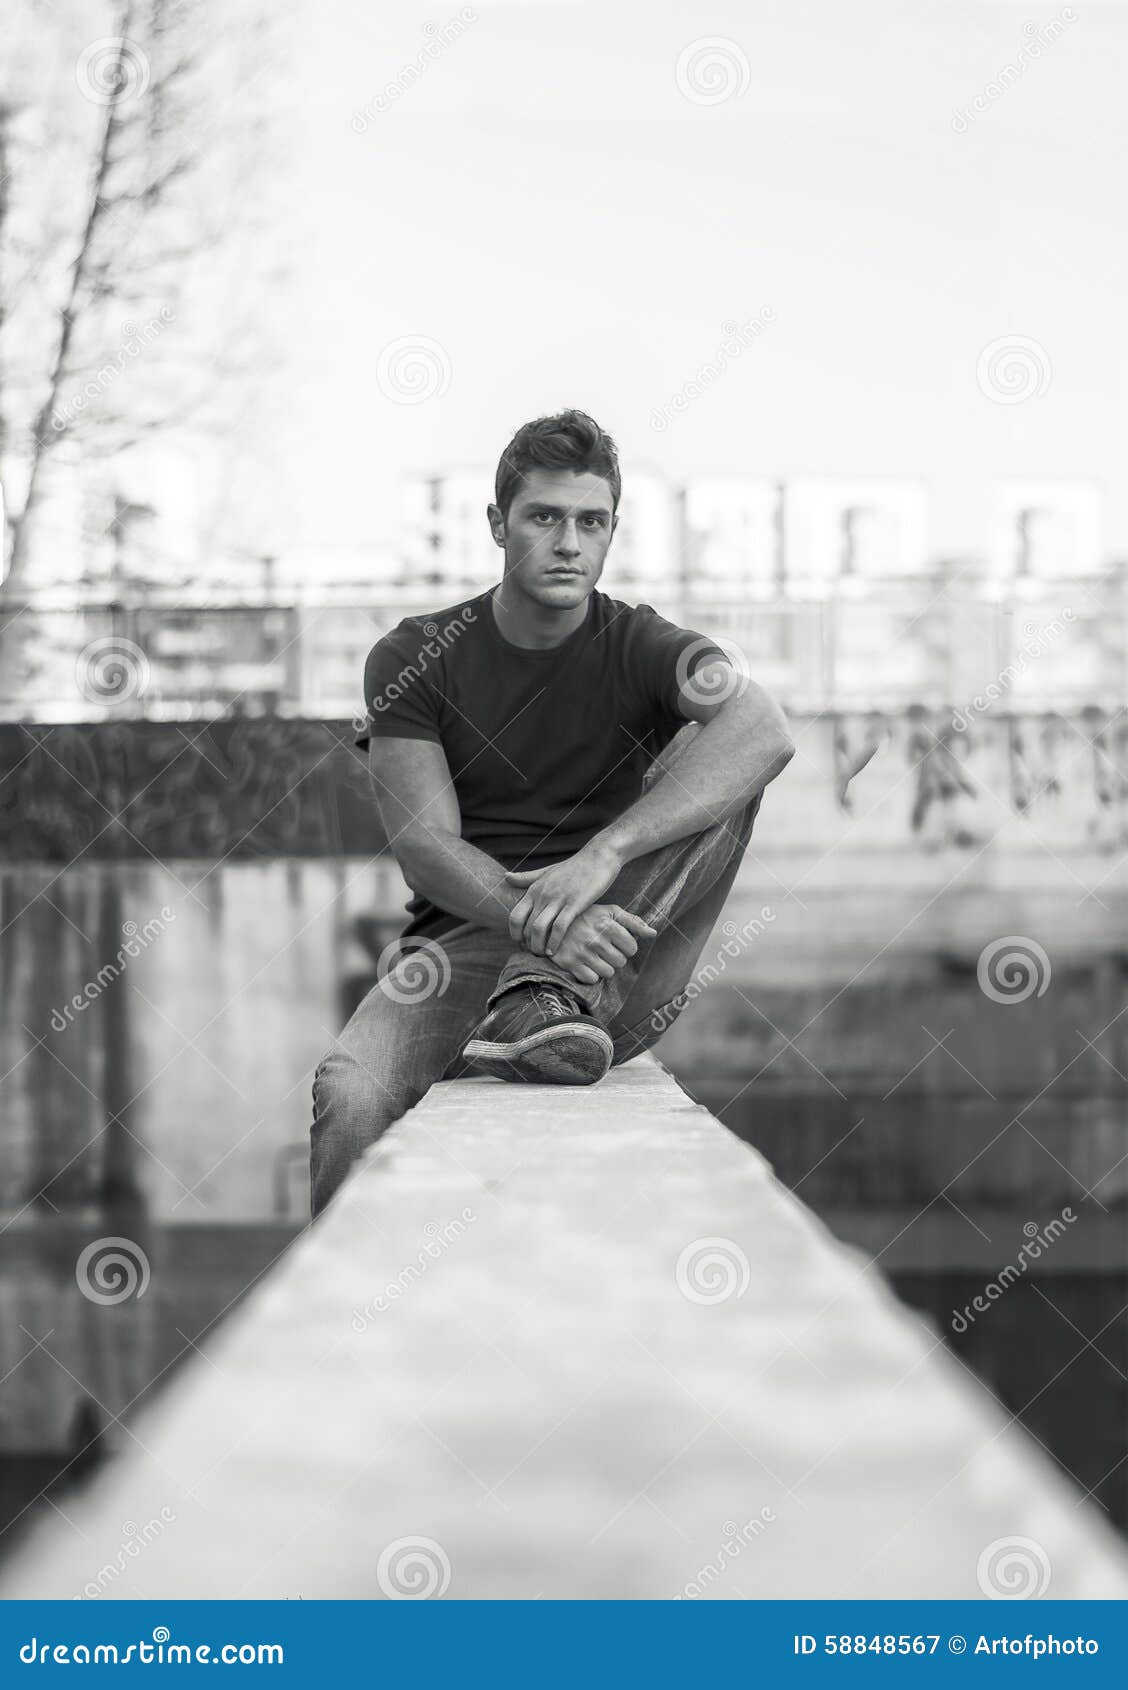 Young Man Sitting on Dirty Wall, Looking at Camera Stock Image - Image ...